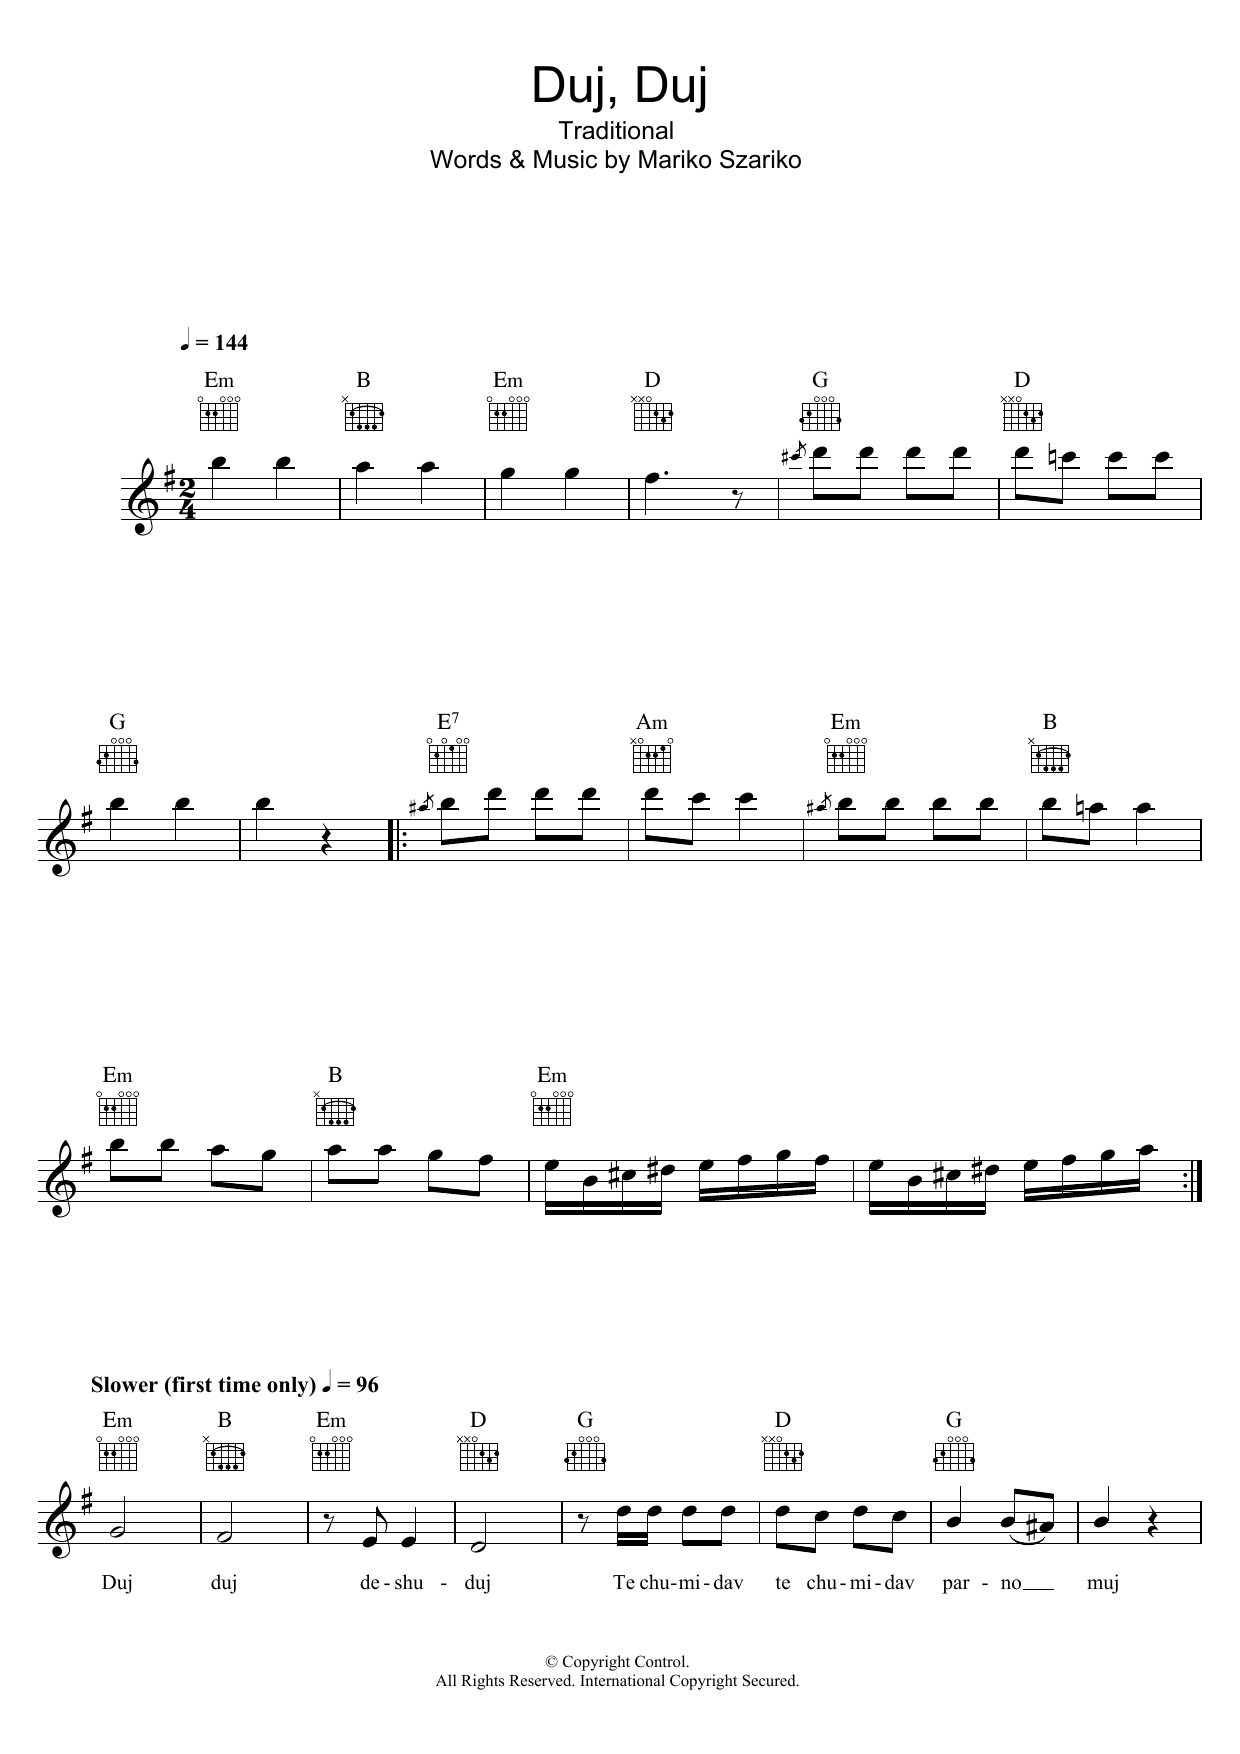 Traditional Duj, Duj (Szariko Mariko) Sheet Music Notes & Chords for Melody Line, Lyrics & Chords - Download or Print PDF